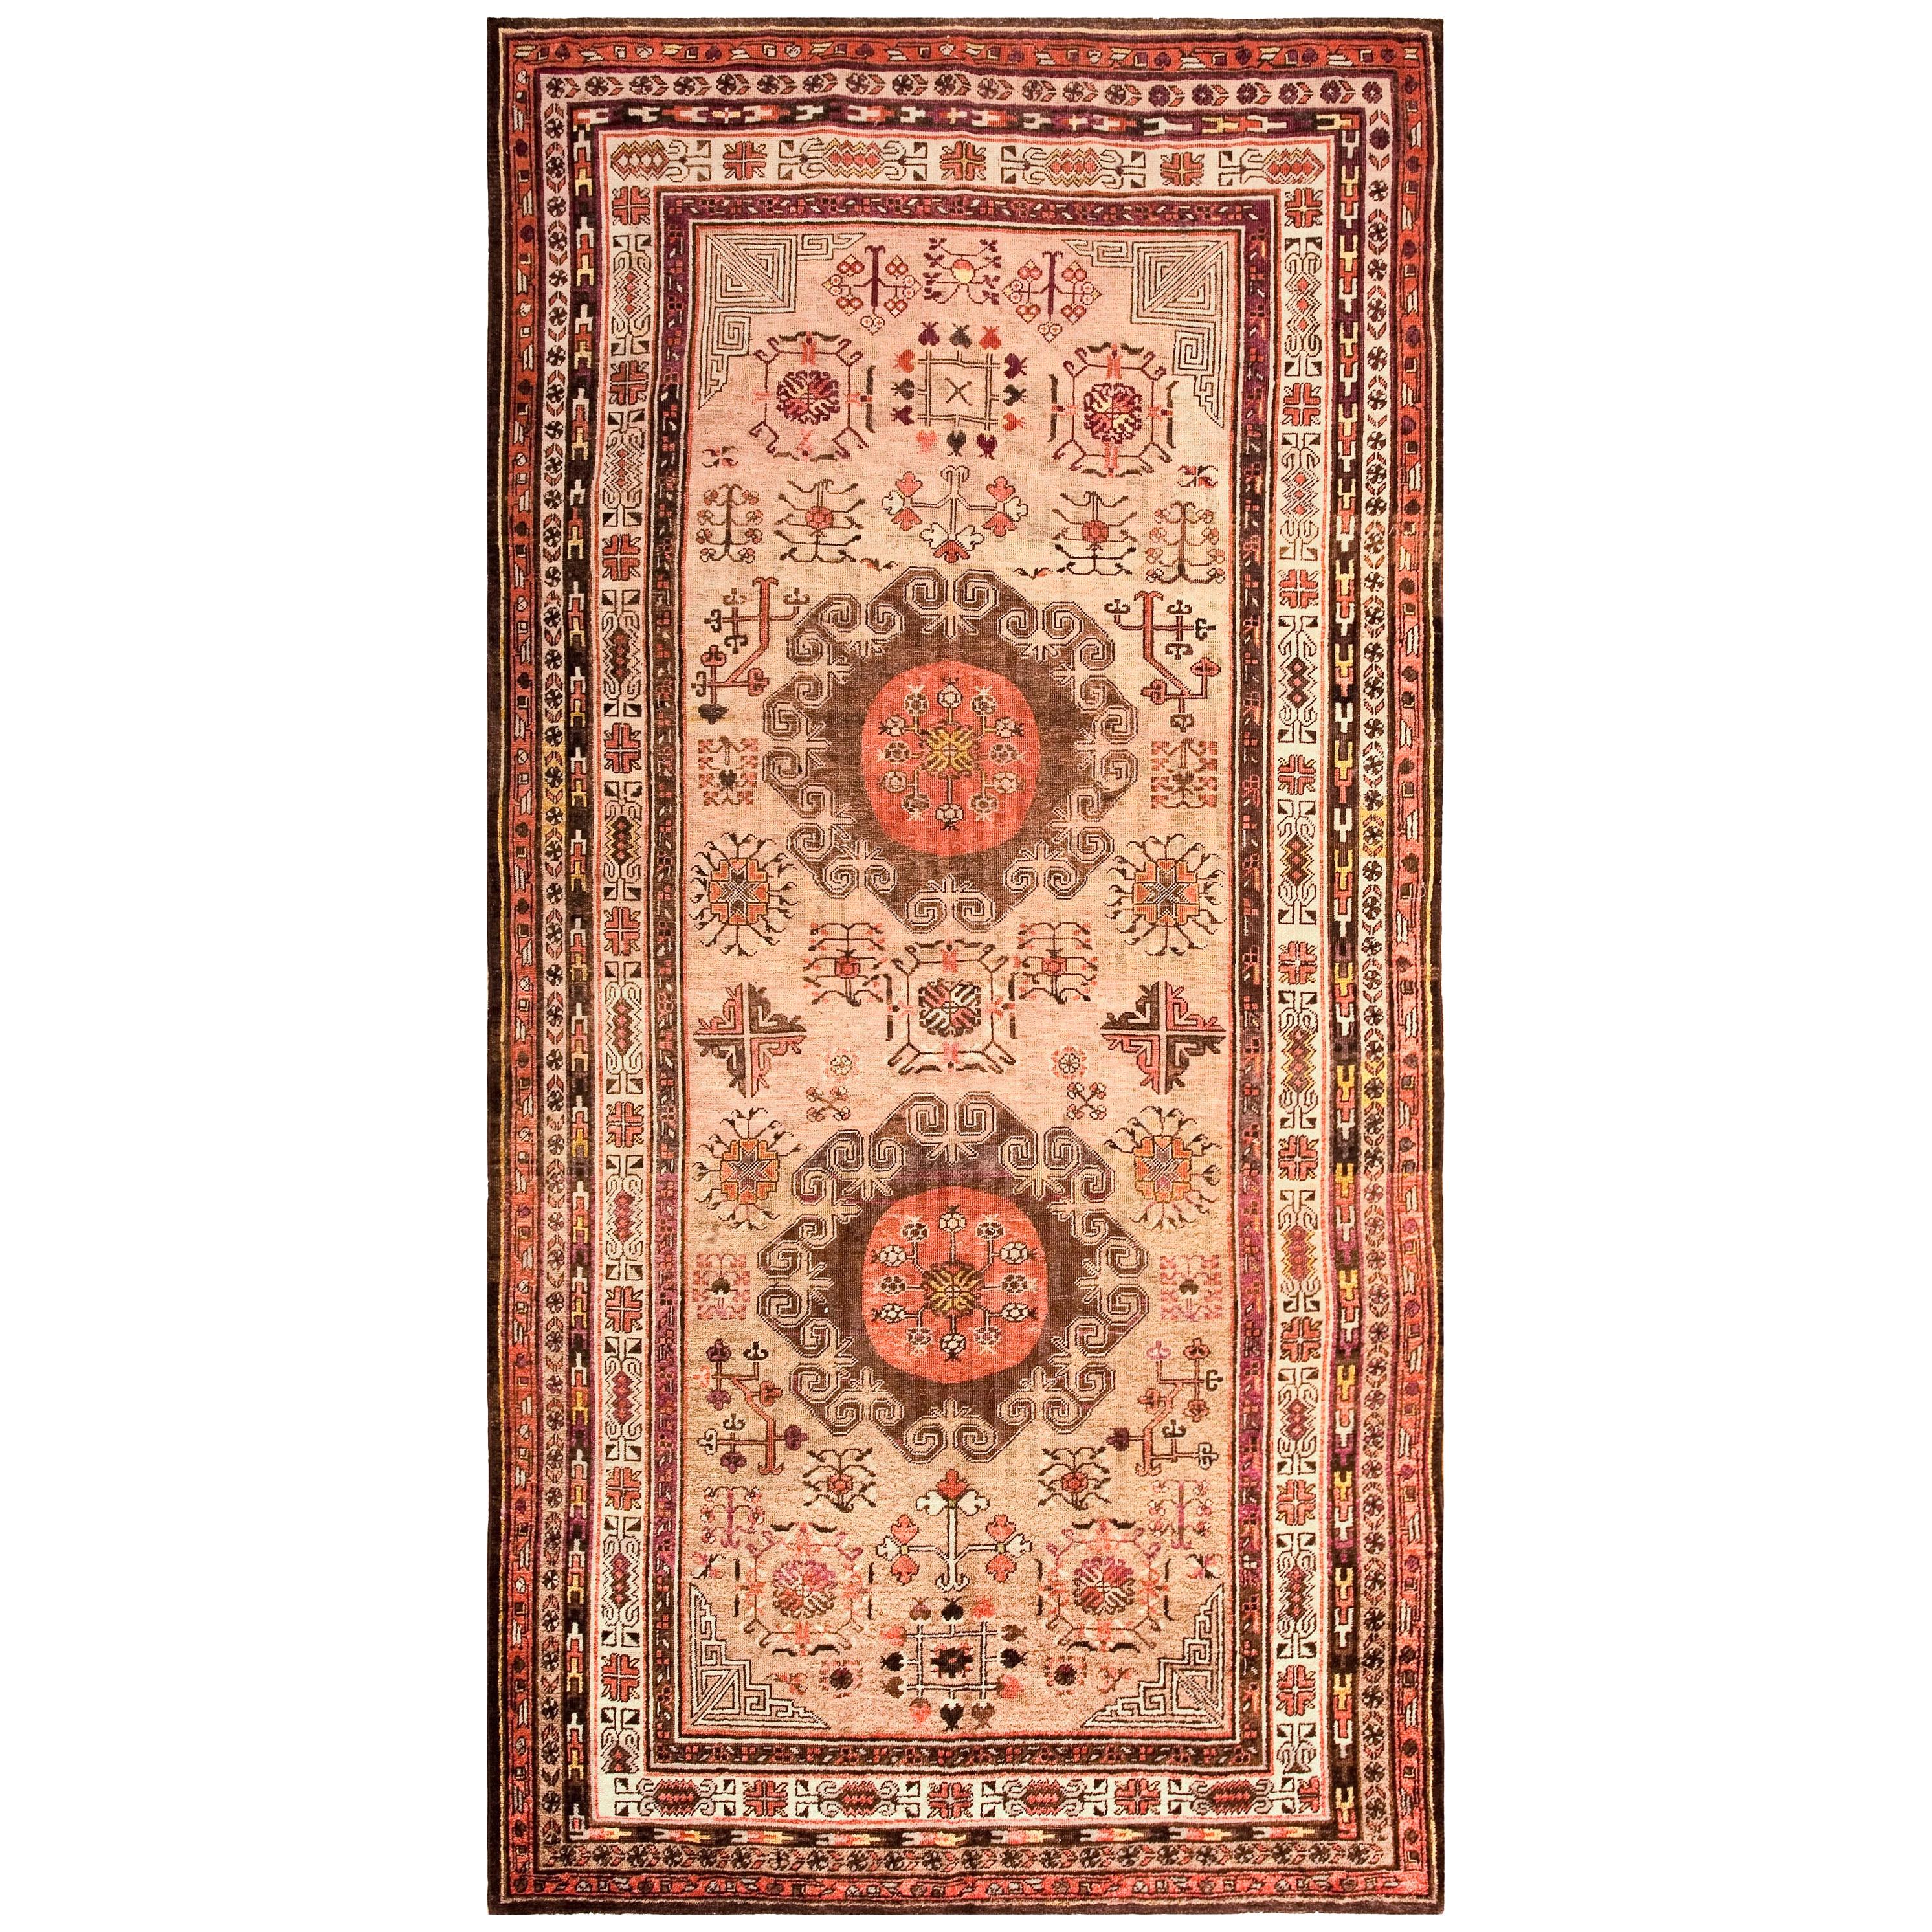 Late 19th Century Central Asian Khotan Carpet ( 6'9" x 13'3" - 205 x 404 ) For Sale